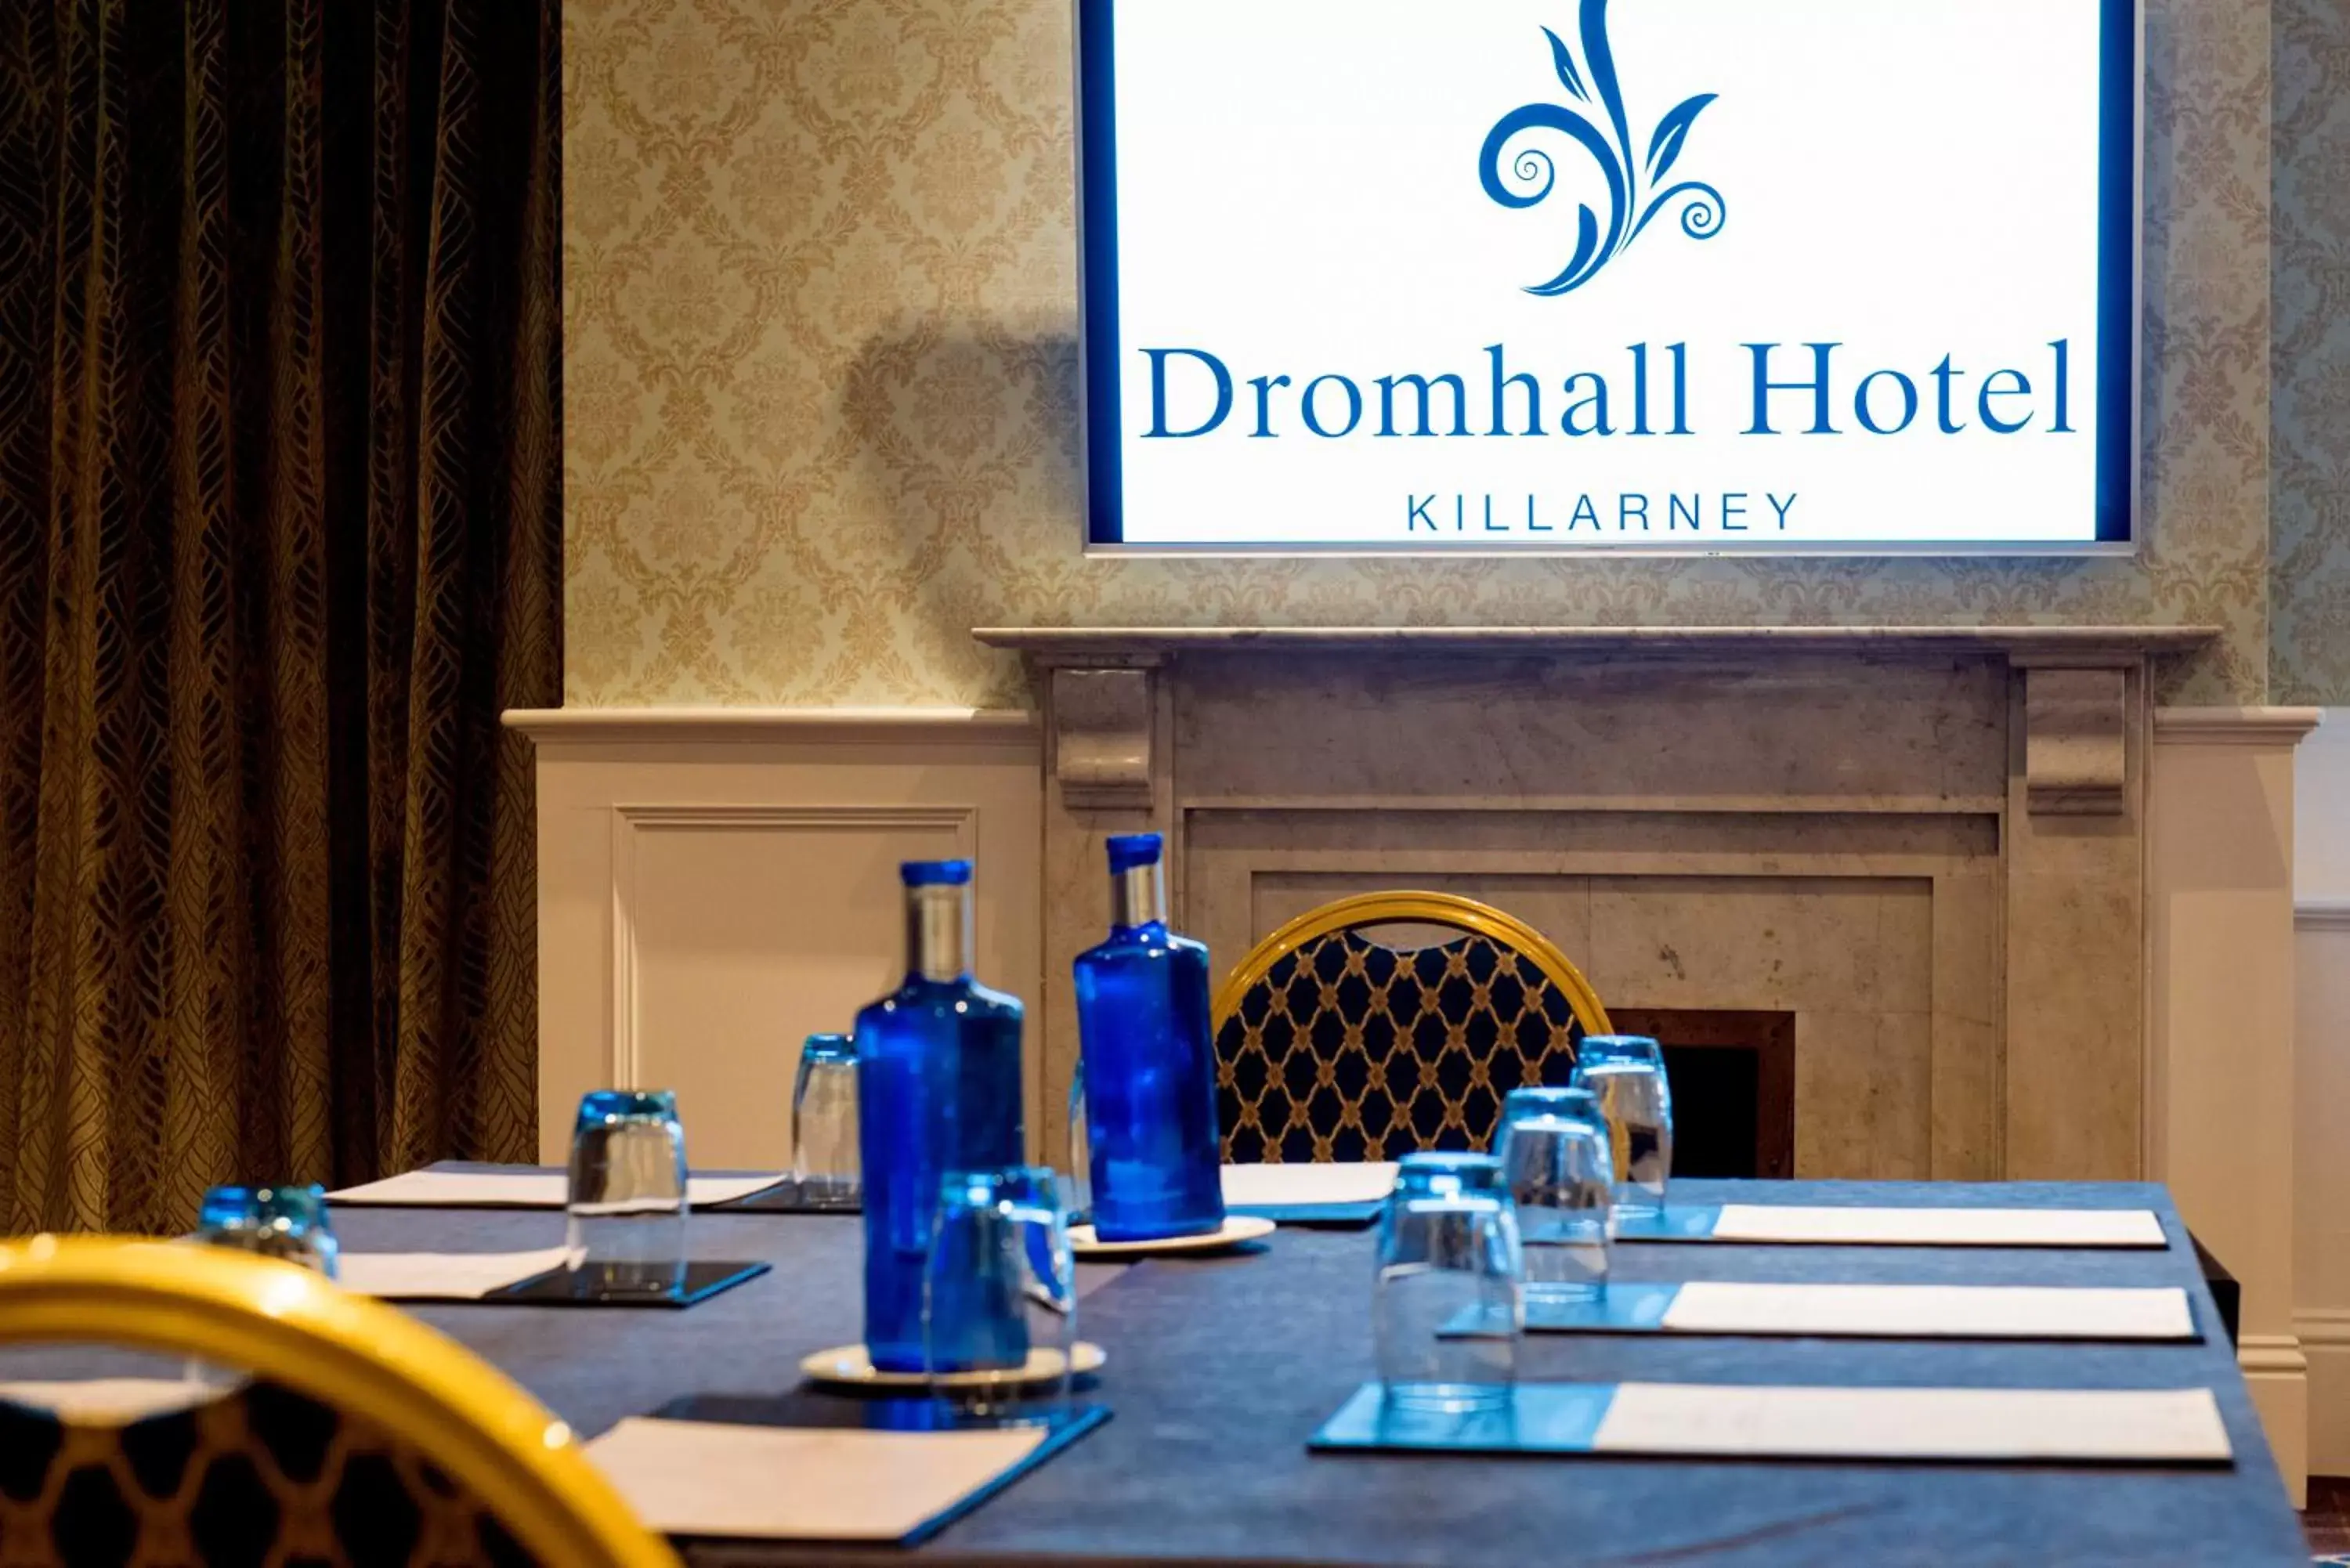 Property logo or sign in Killarney Dromhall Hotel